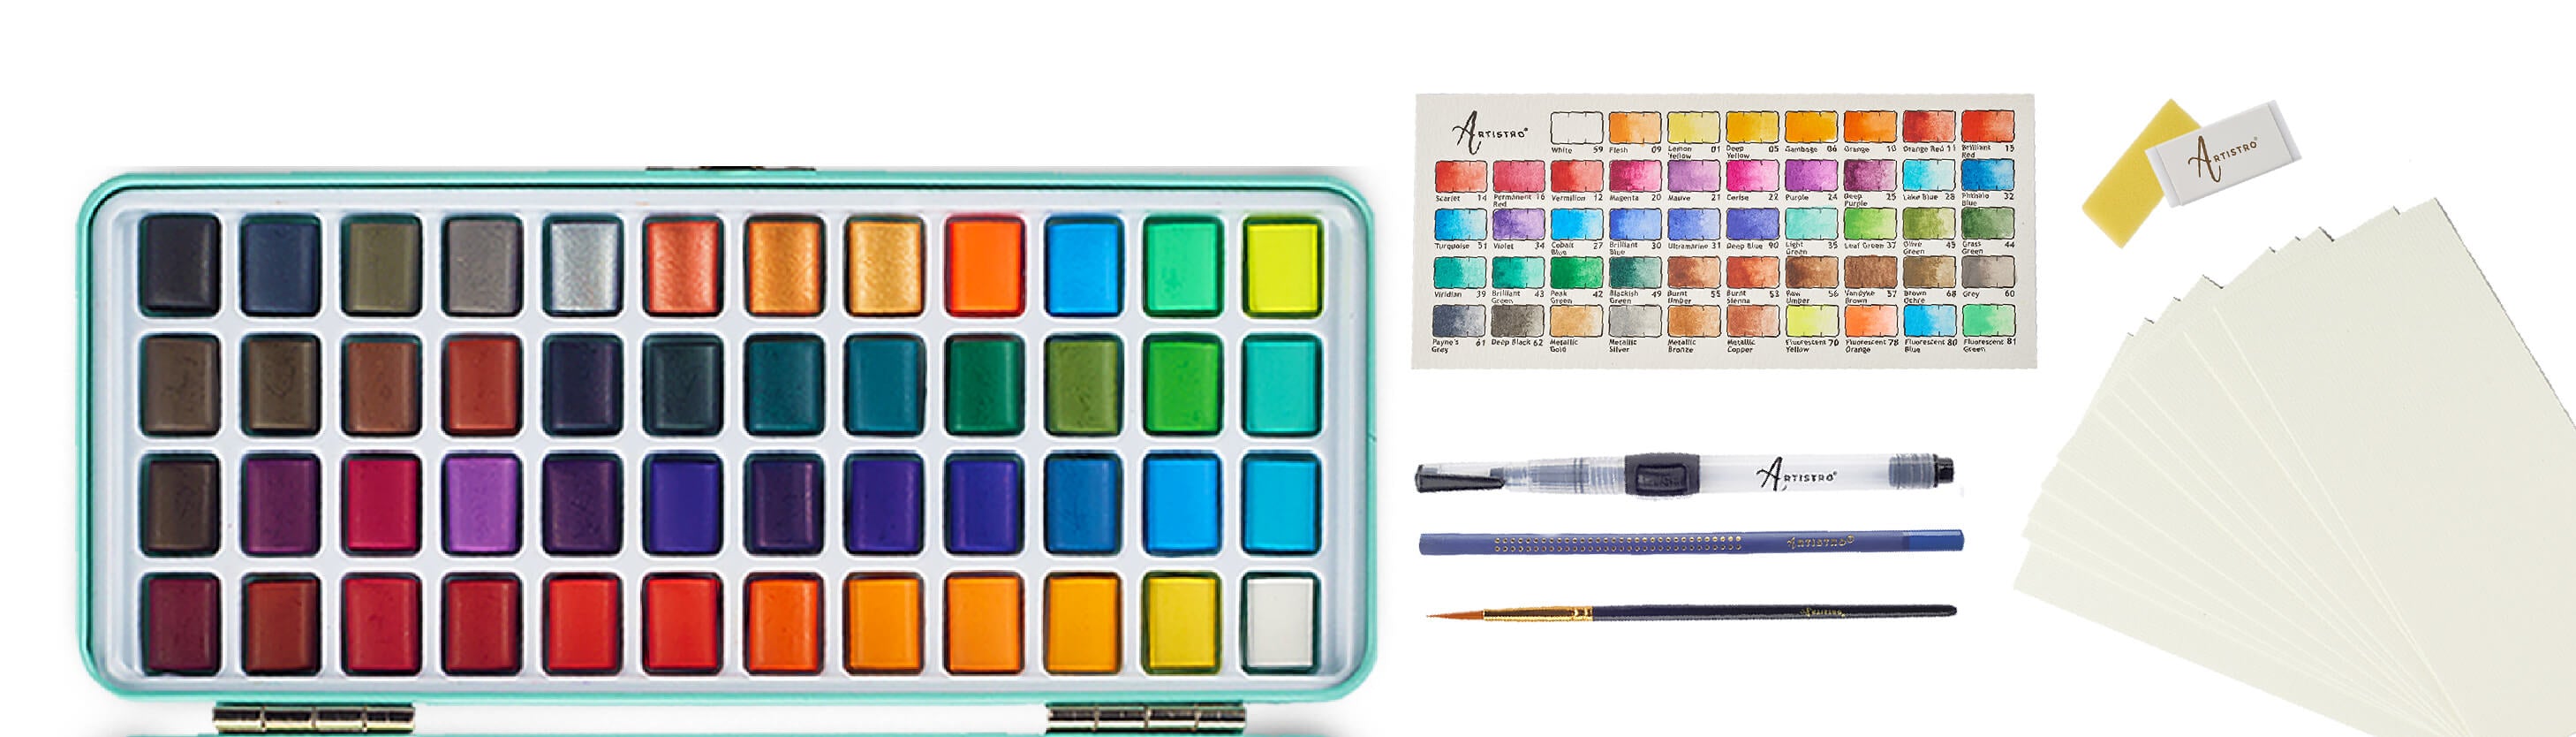 painting box set-paint set-paint box set-watercolor painting kit-watercolor paint set-watercolor kit-watercolor paint sets